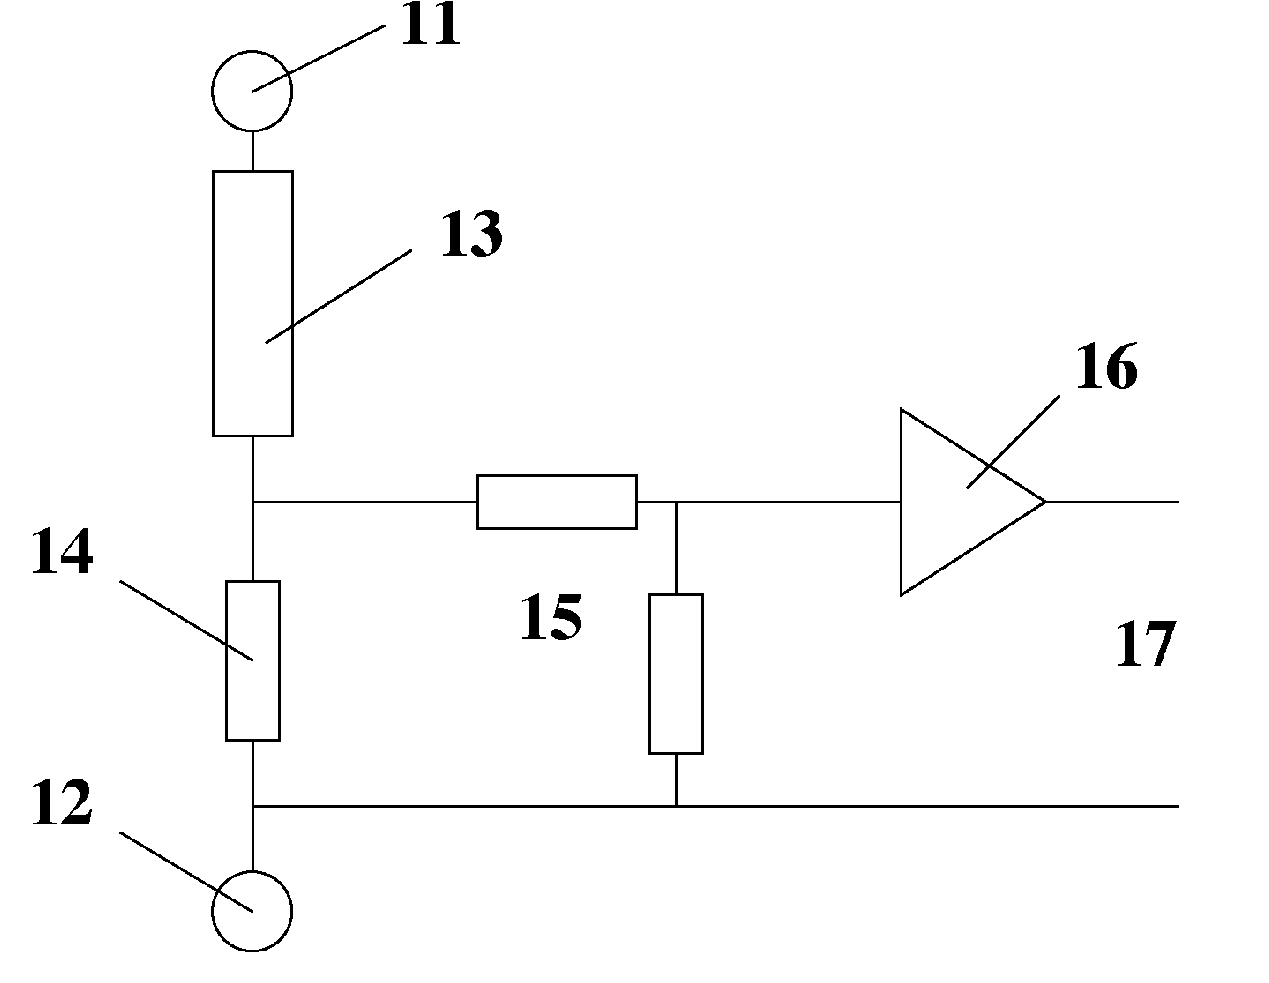 Modular voltage sensor